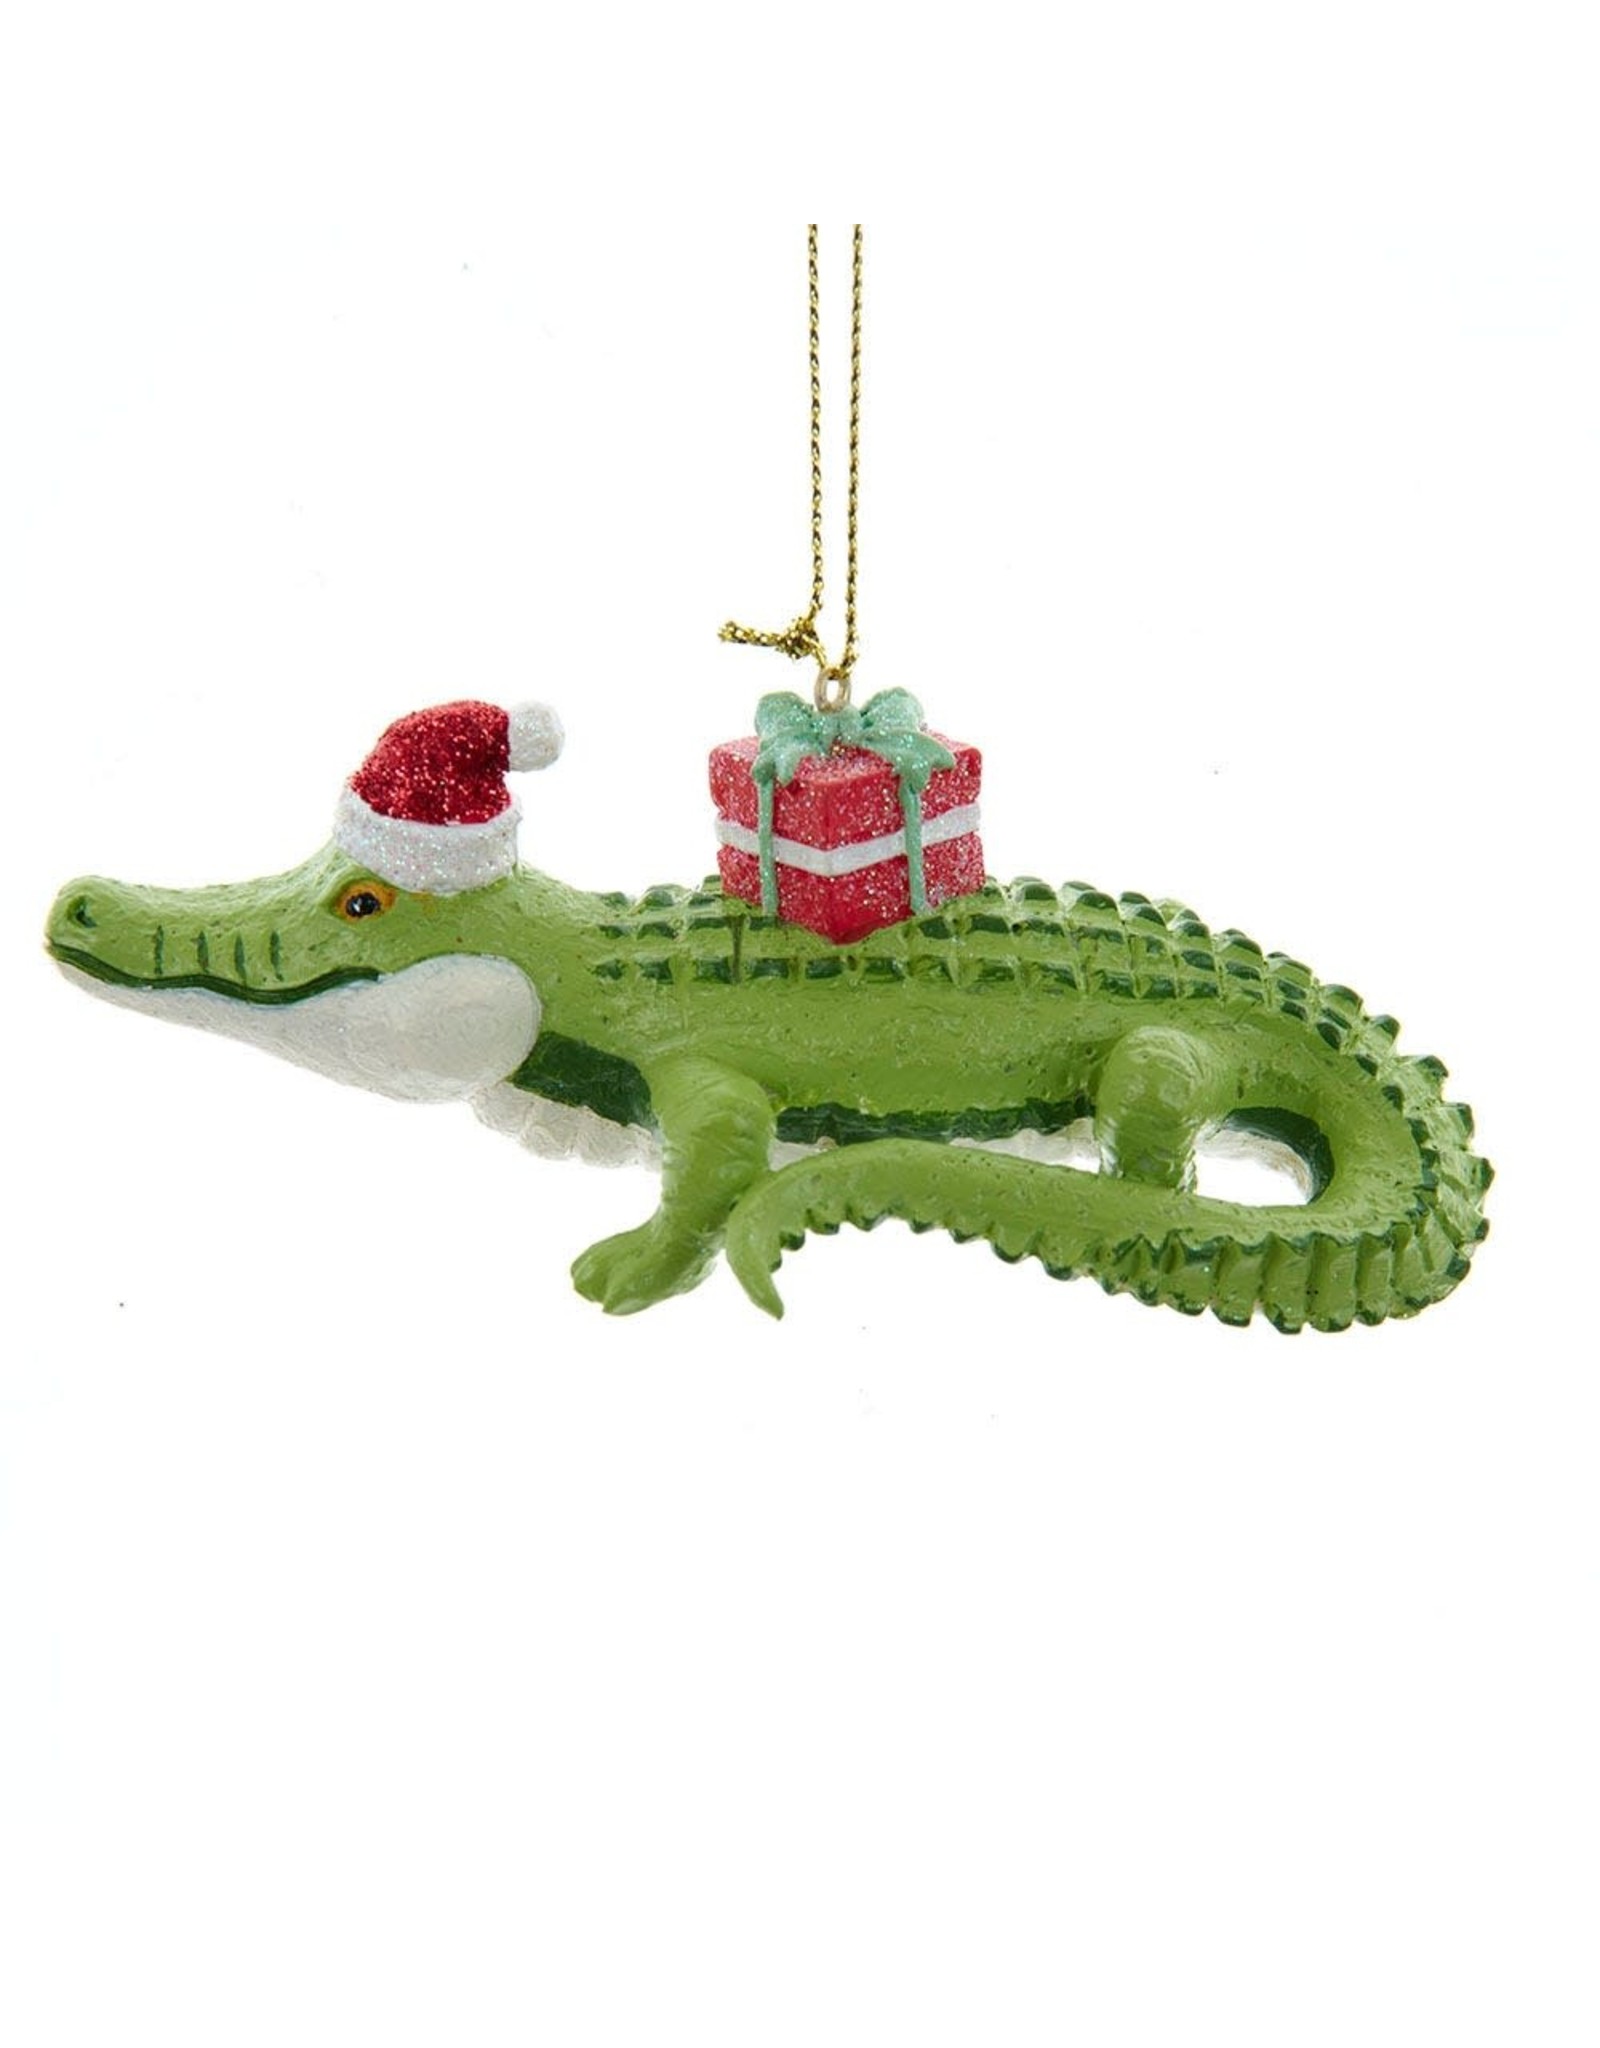 Kurt Adler Under The Sea Crocodile With Gift Box Ornament